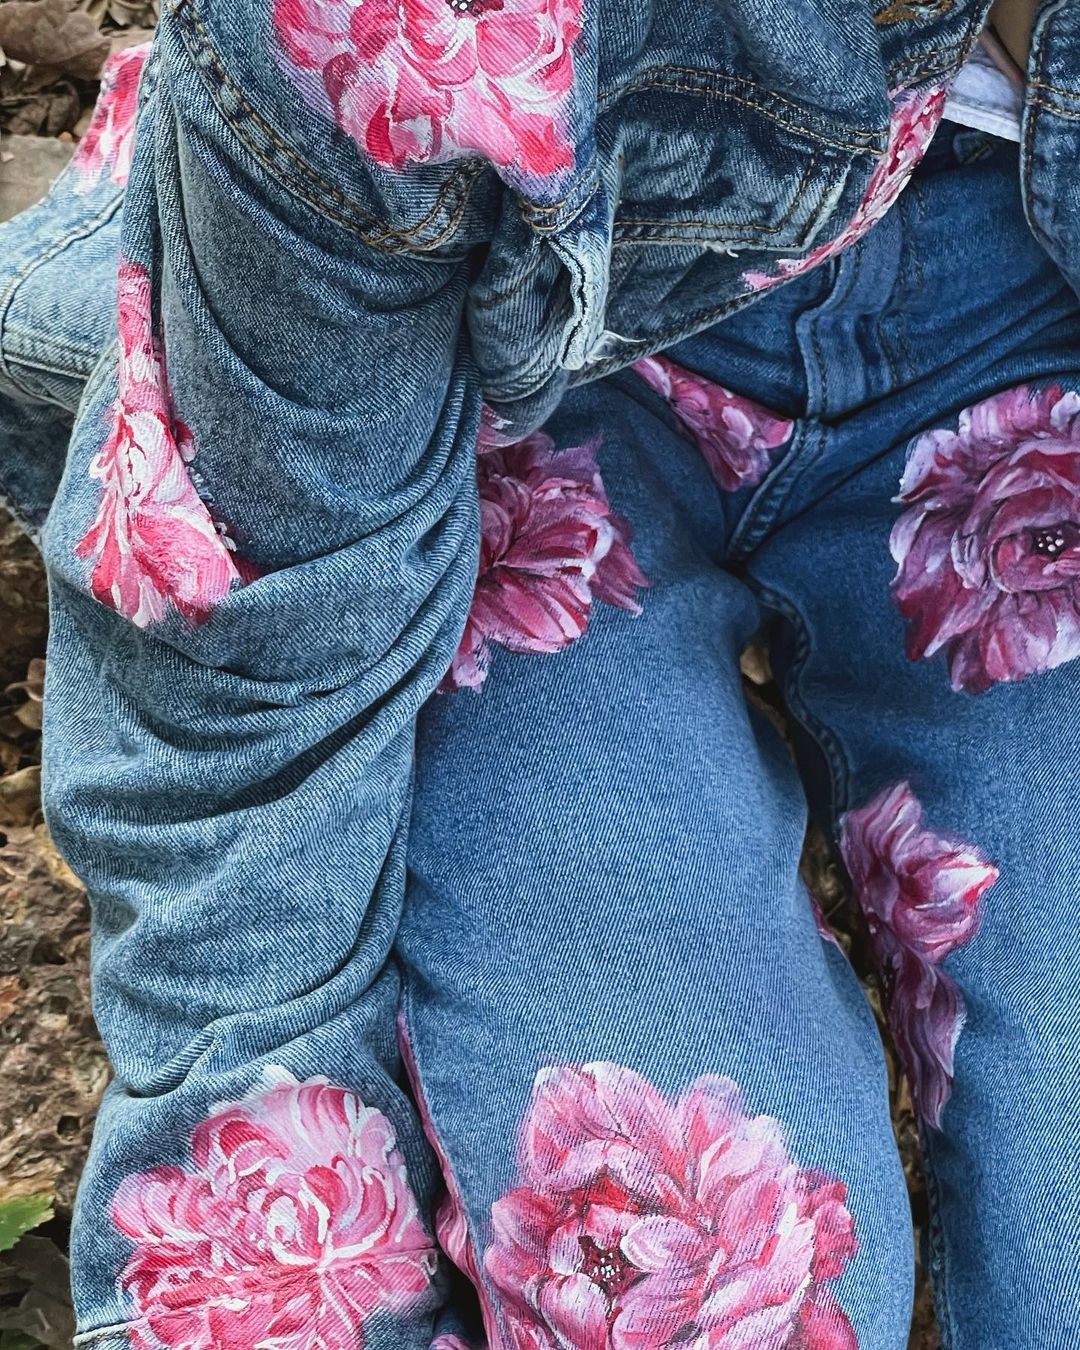 Handpainted Vintage Floral Denim Jeans